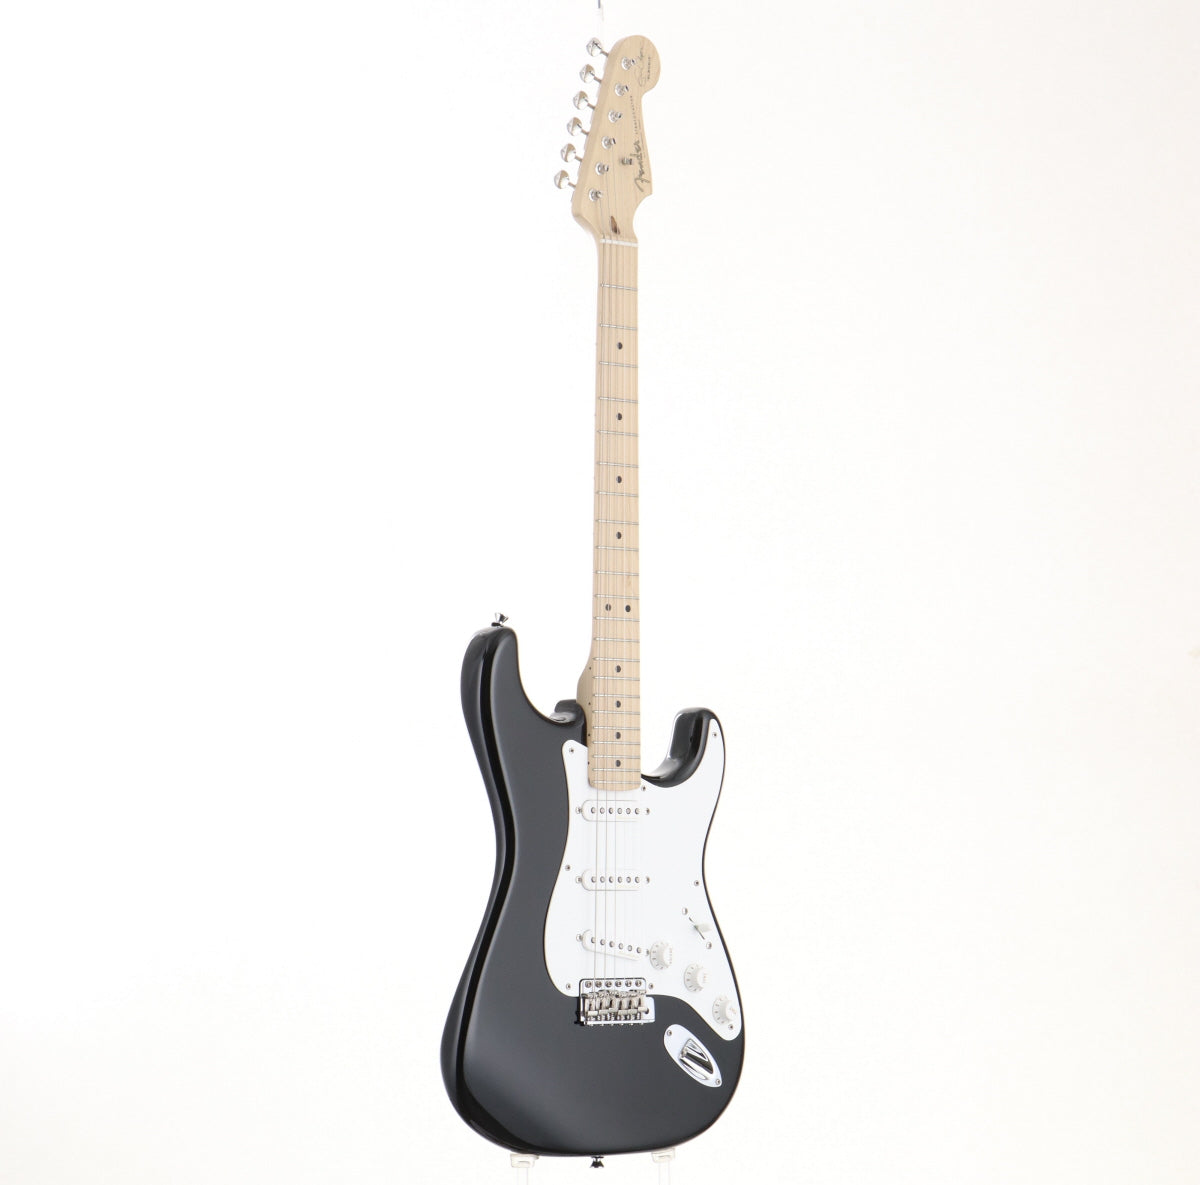 [SN US17102942] USED FENDER USA / Eric Clapton Stratocaster Noiseless Pickups [10]